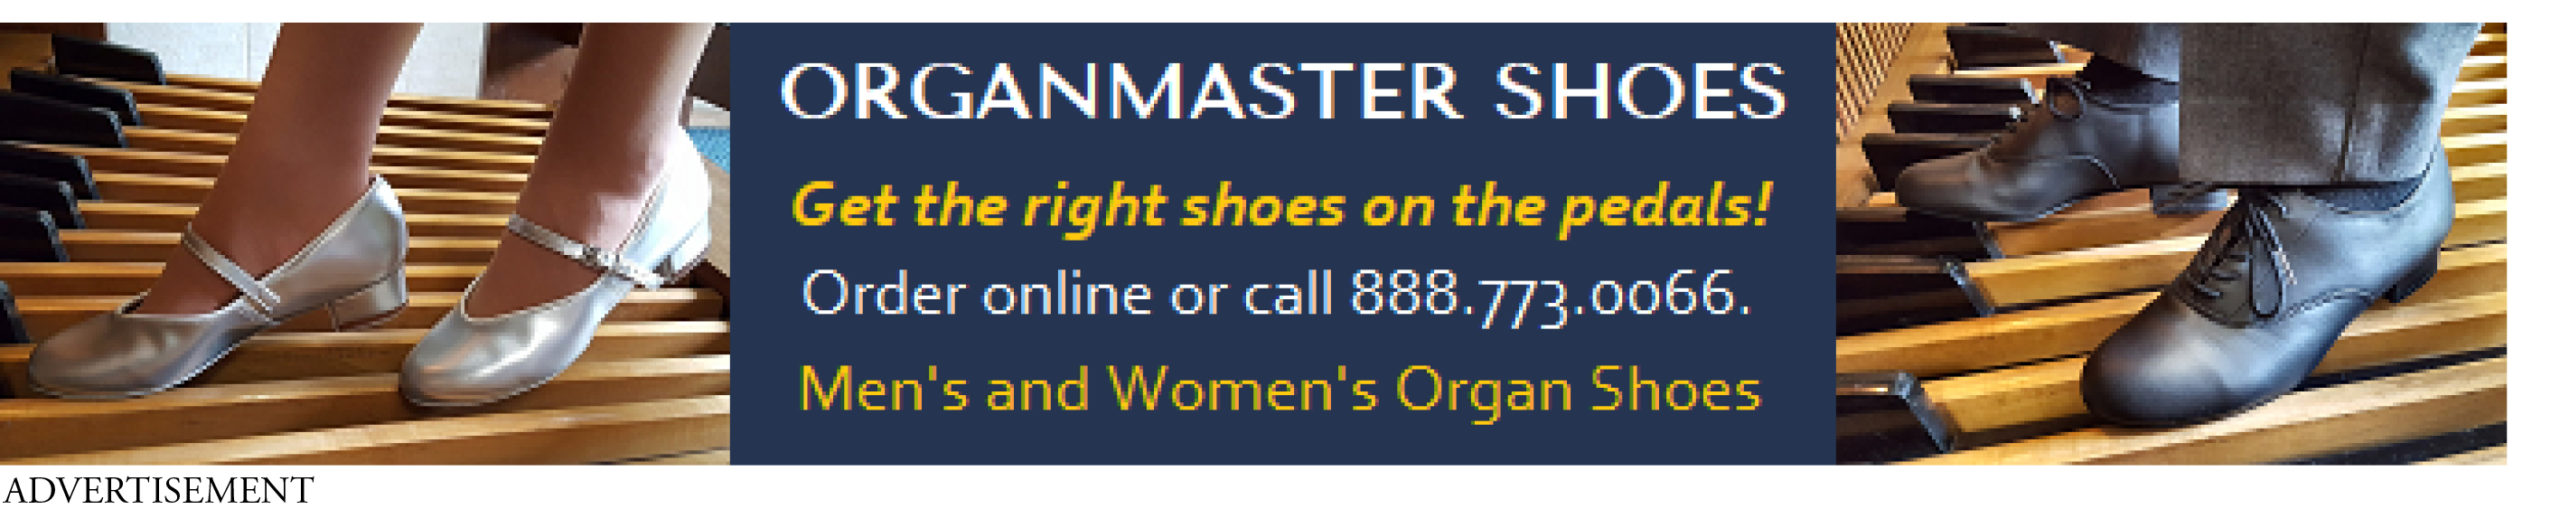 OrganMaster Ad